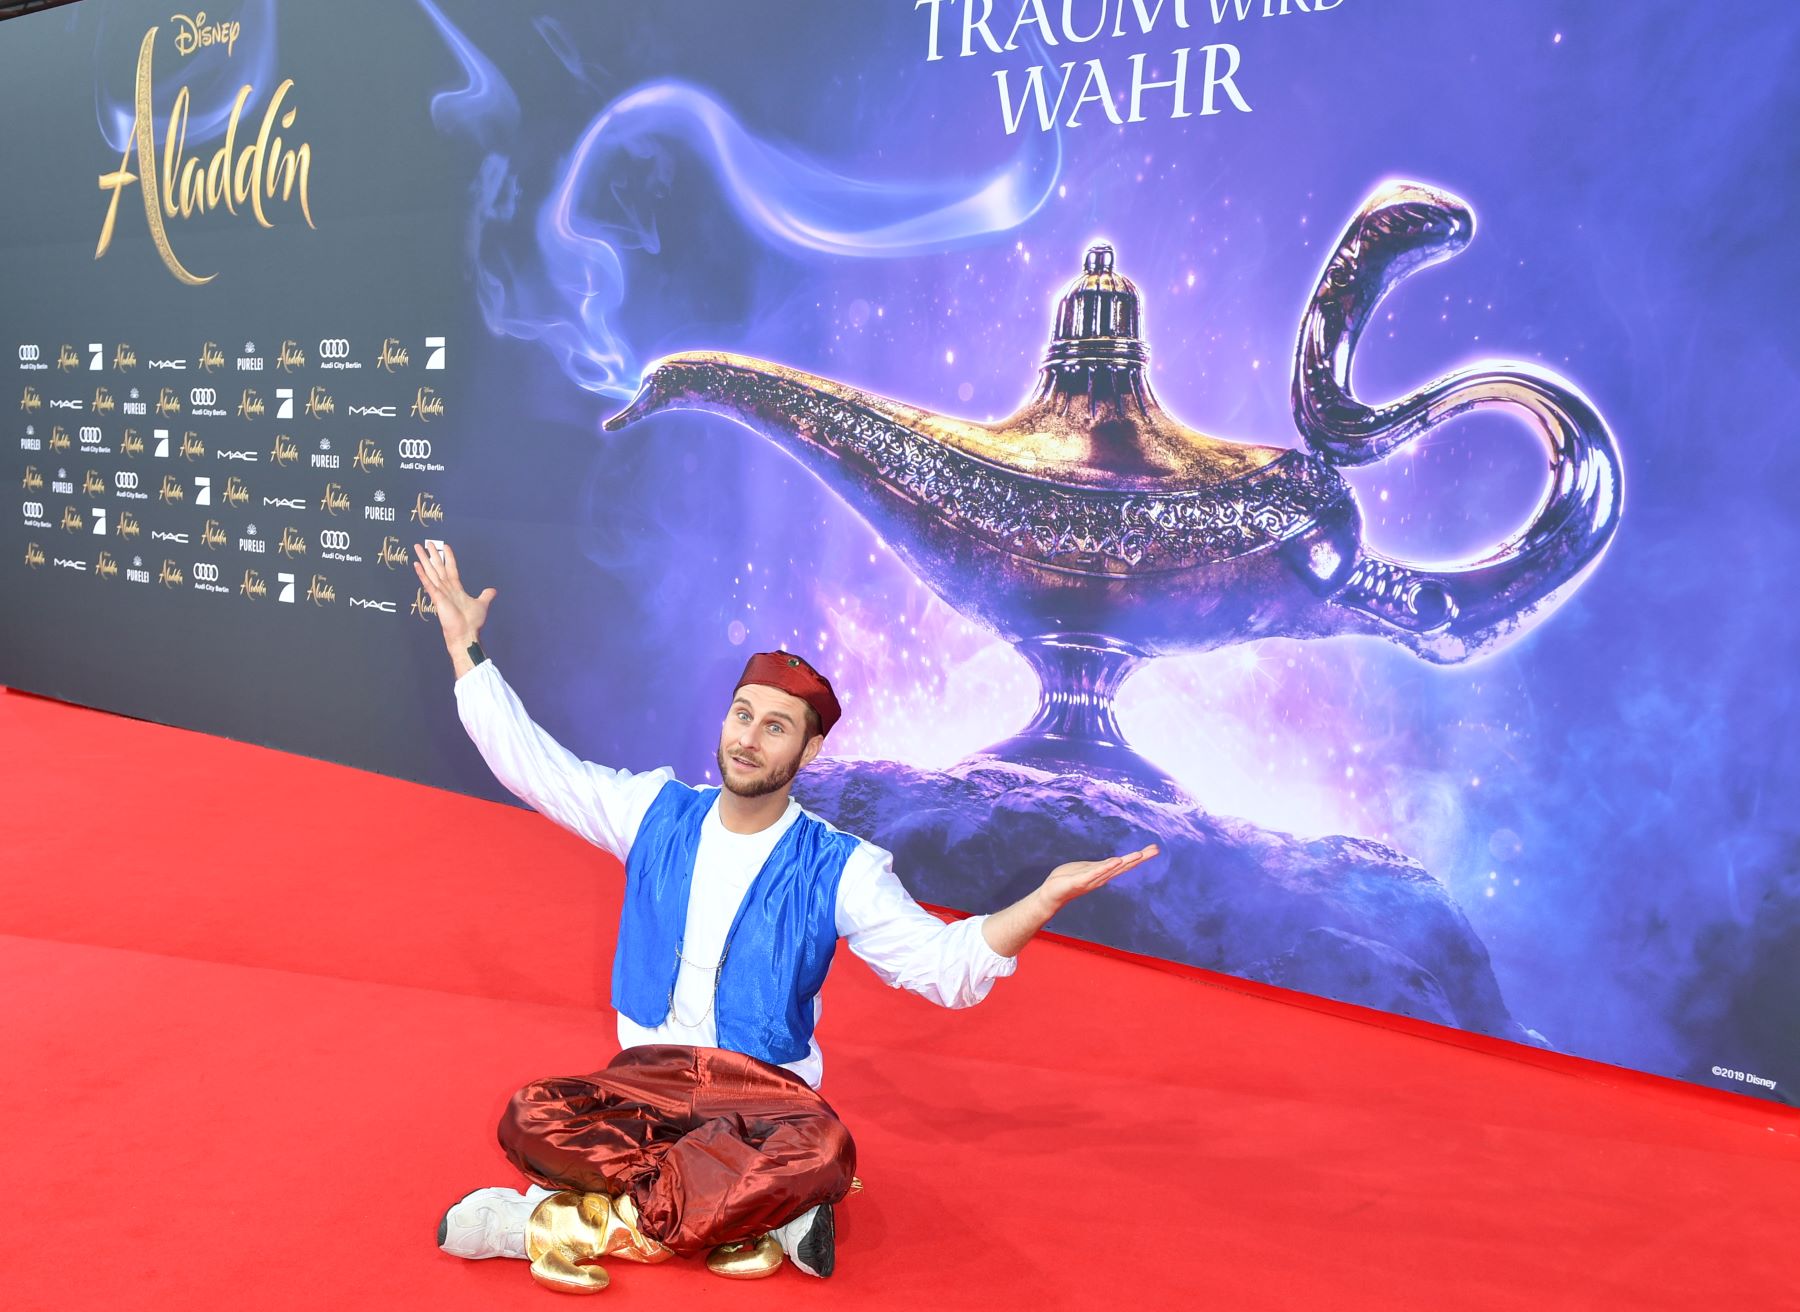 An 'Aladdin' red carpet gala screening in Berlin, Germany